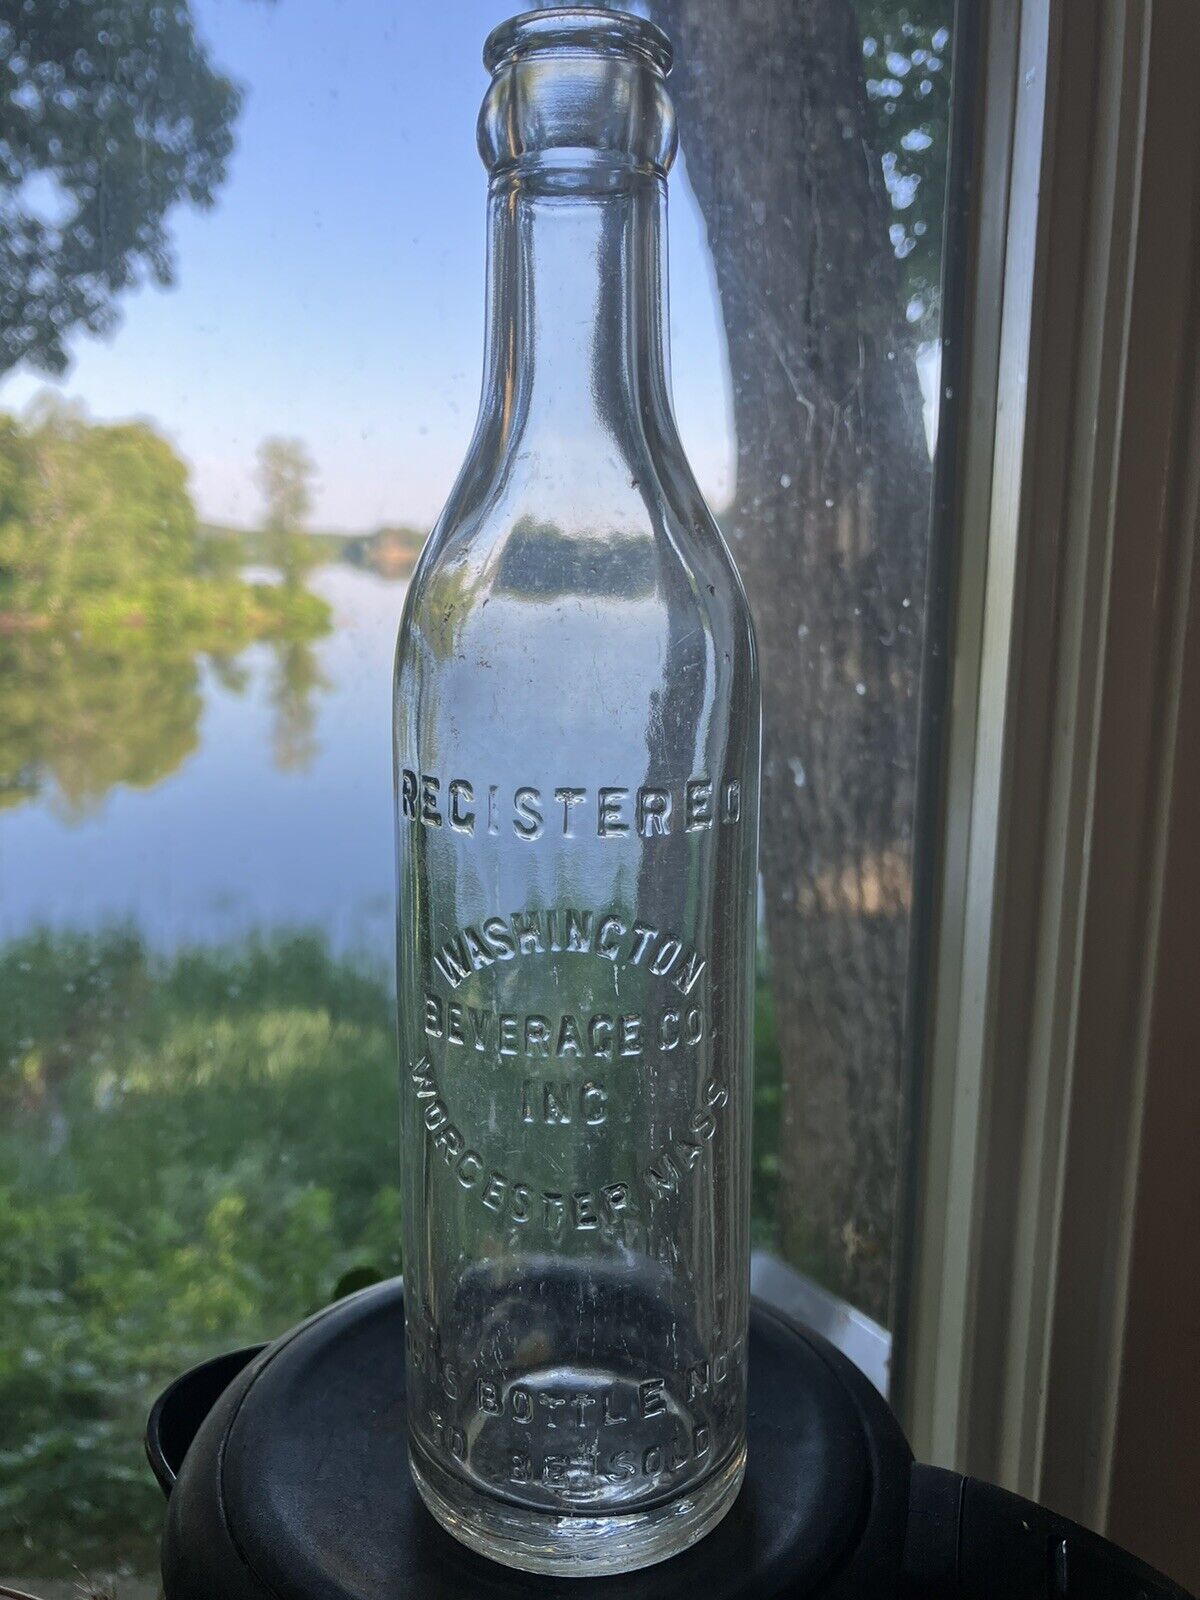 Washington Beverage Co. - Worcester, Mass. - Vintage Soda Bottle